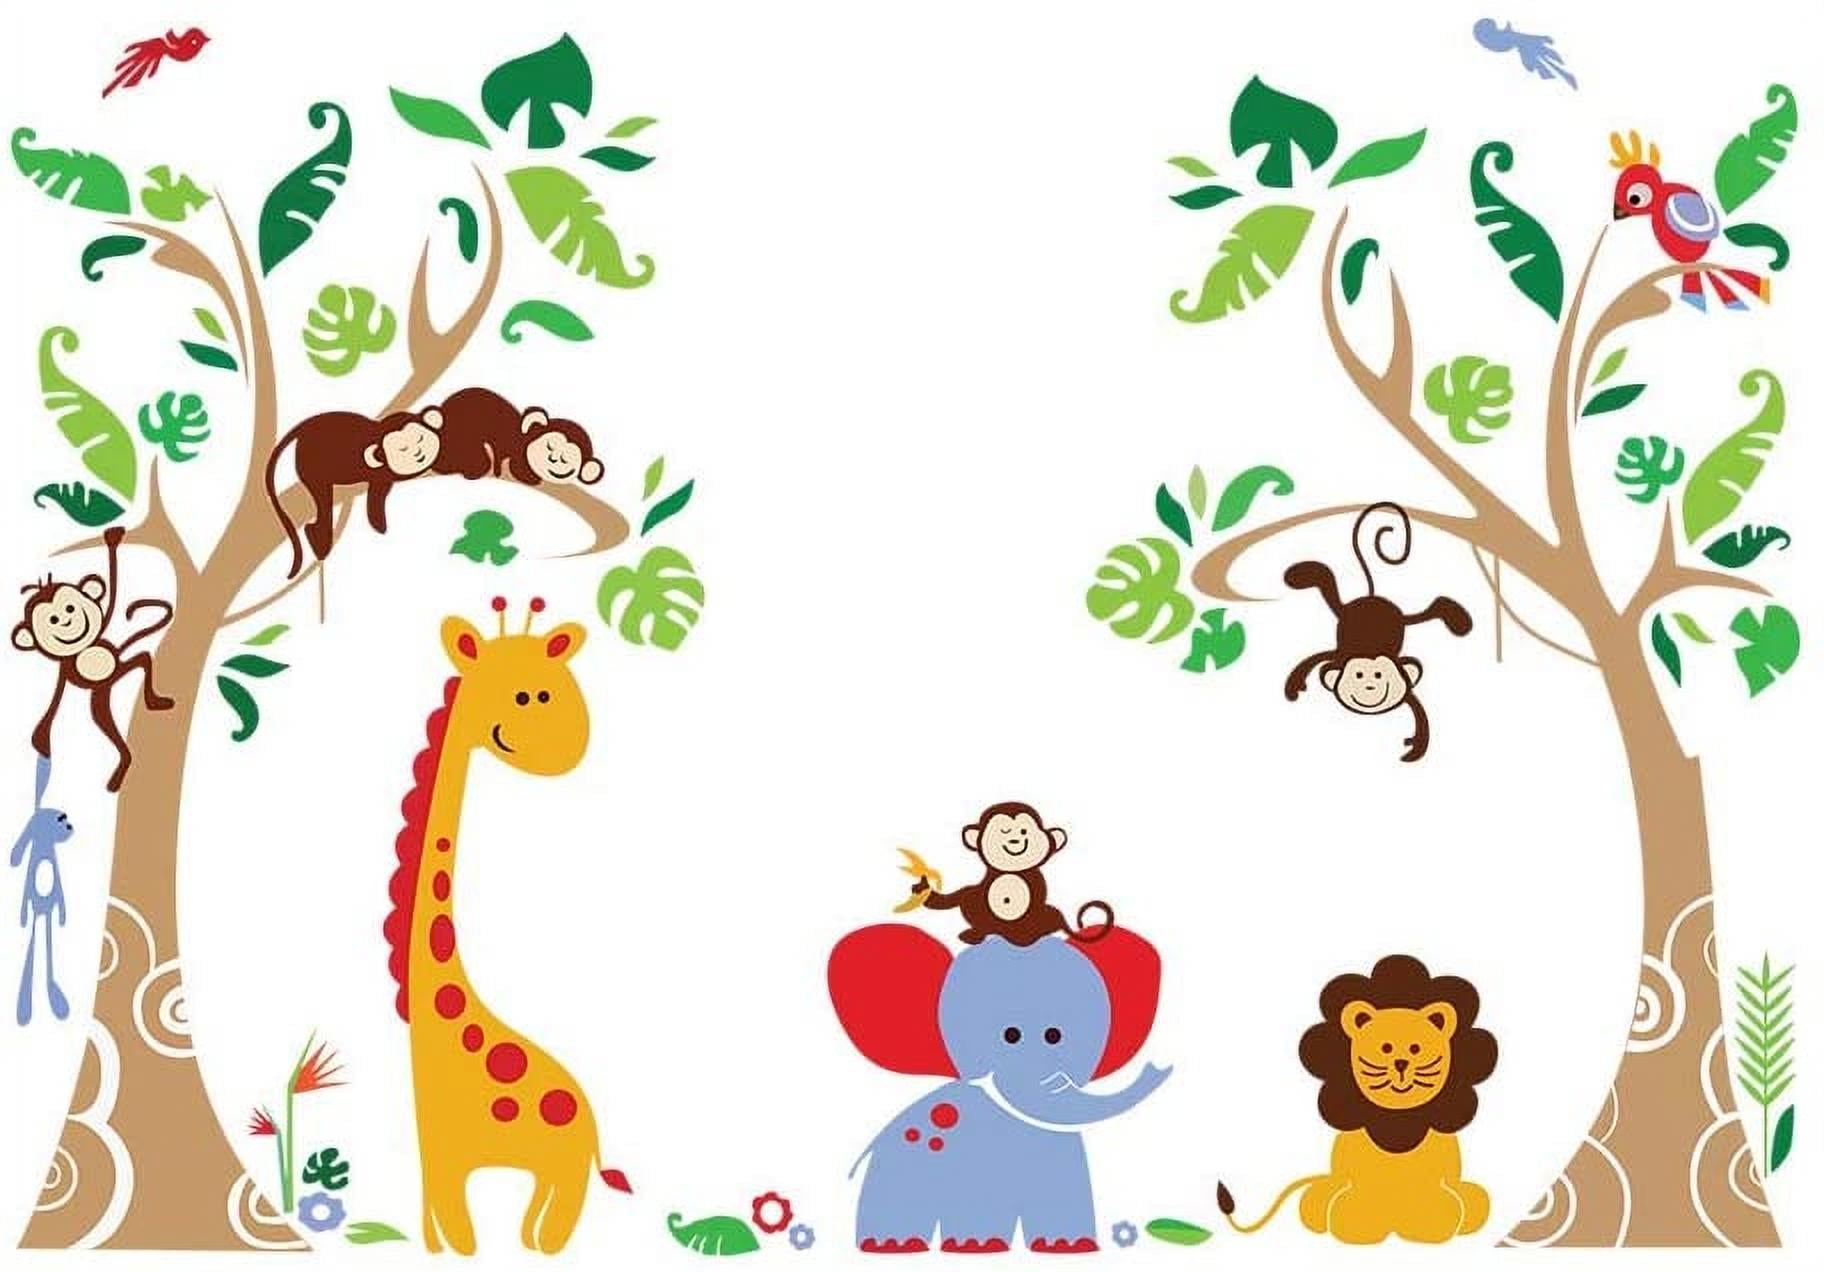 WINOMO Jungle Animal Wall Decals Cartoon Monkeys Coco Nut Tree Nursery Decal Art Murals